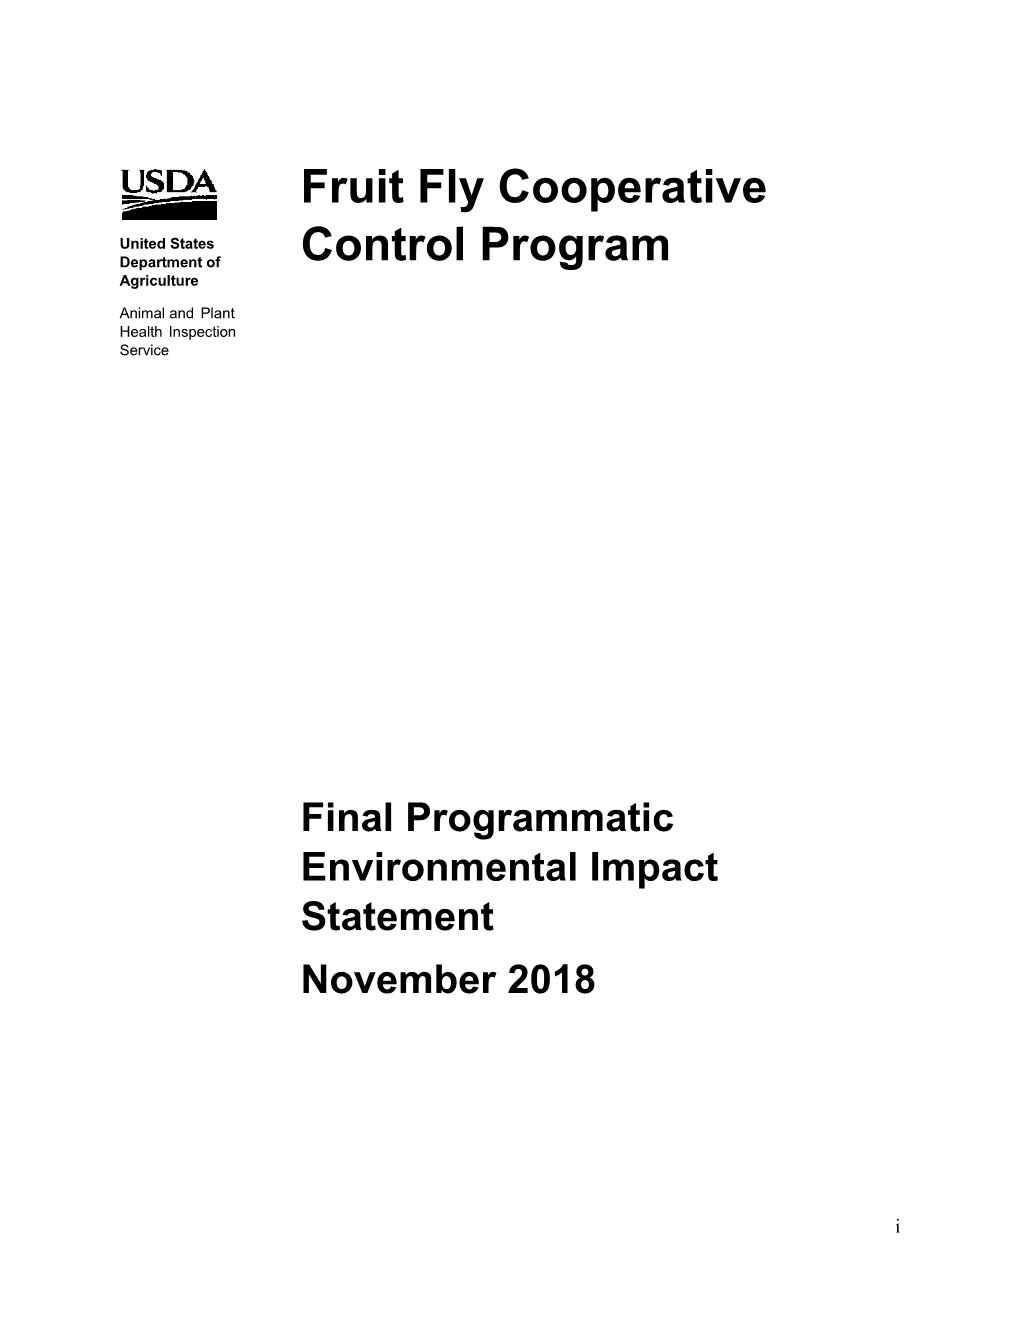 Fruit Fly Cooperative Control Program Final Programmatic Environmental Impact Statement November 2018